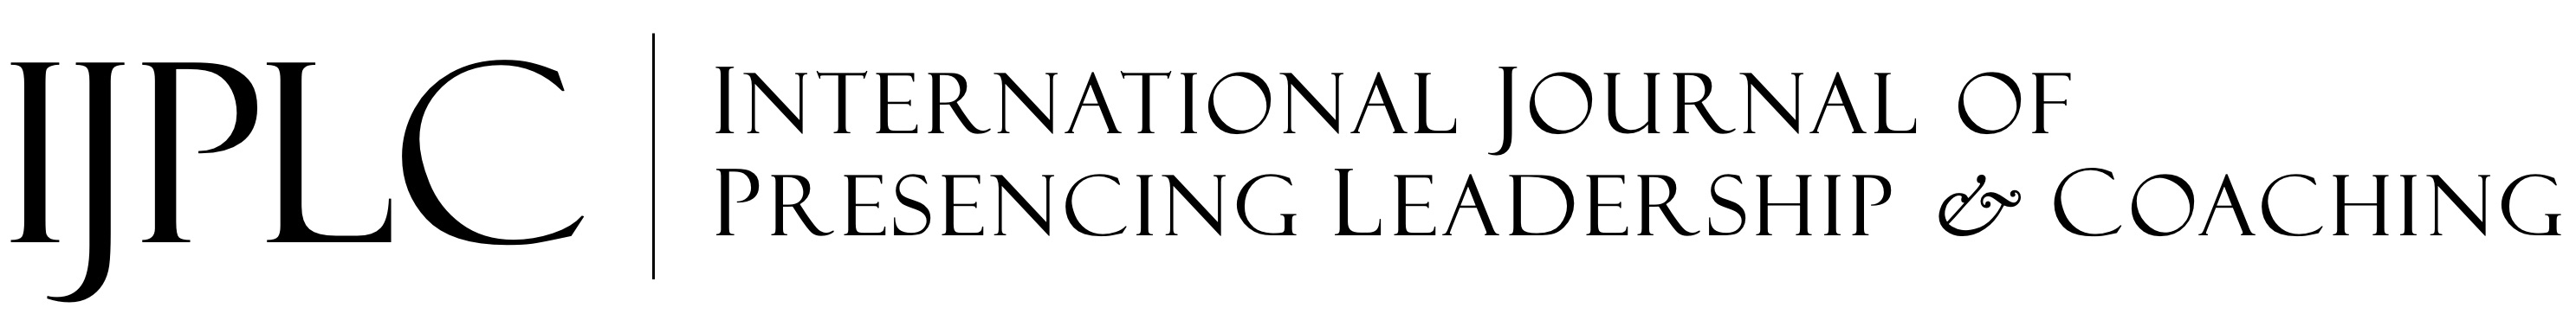 International Journal of Presencing Leadership & Coaching